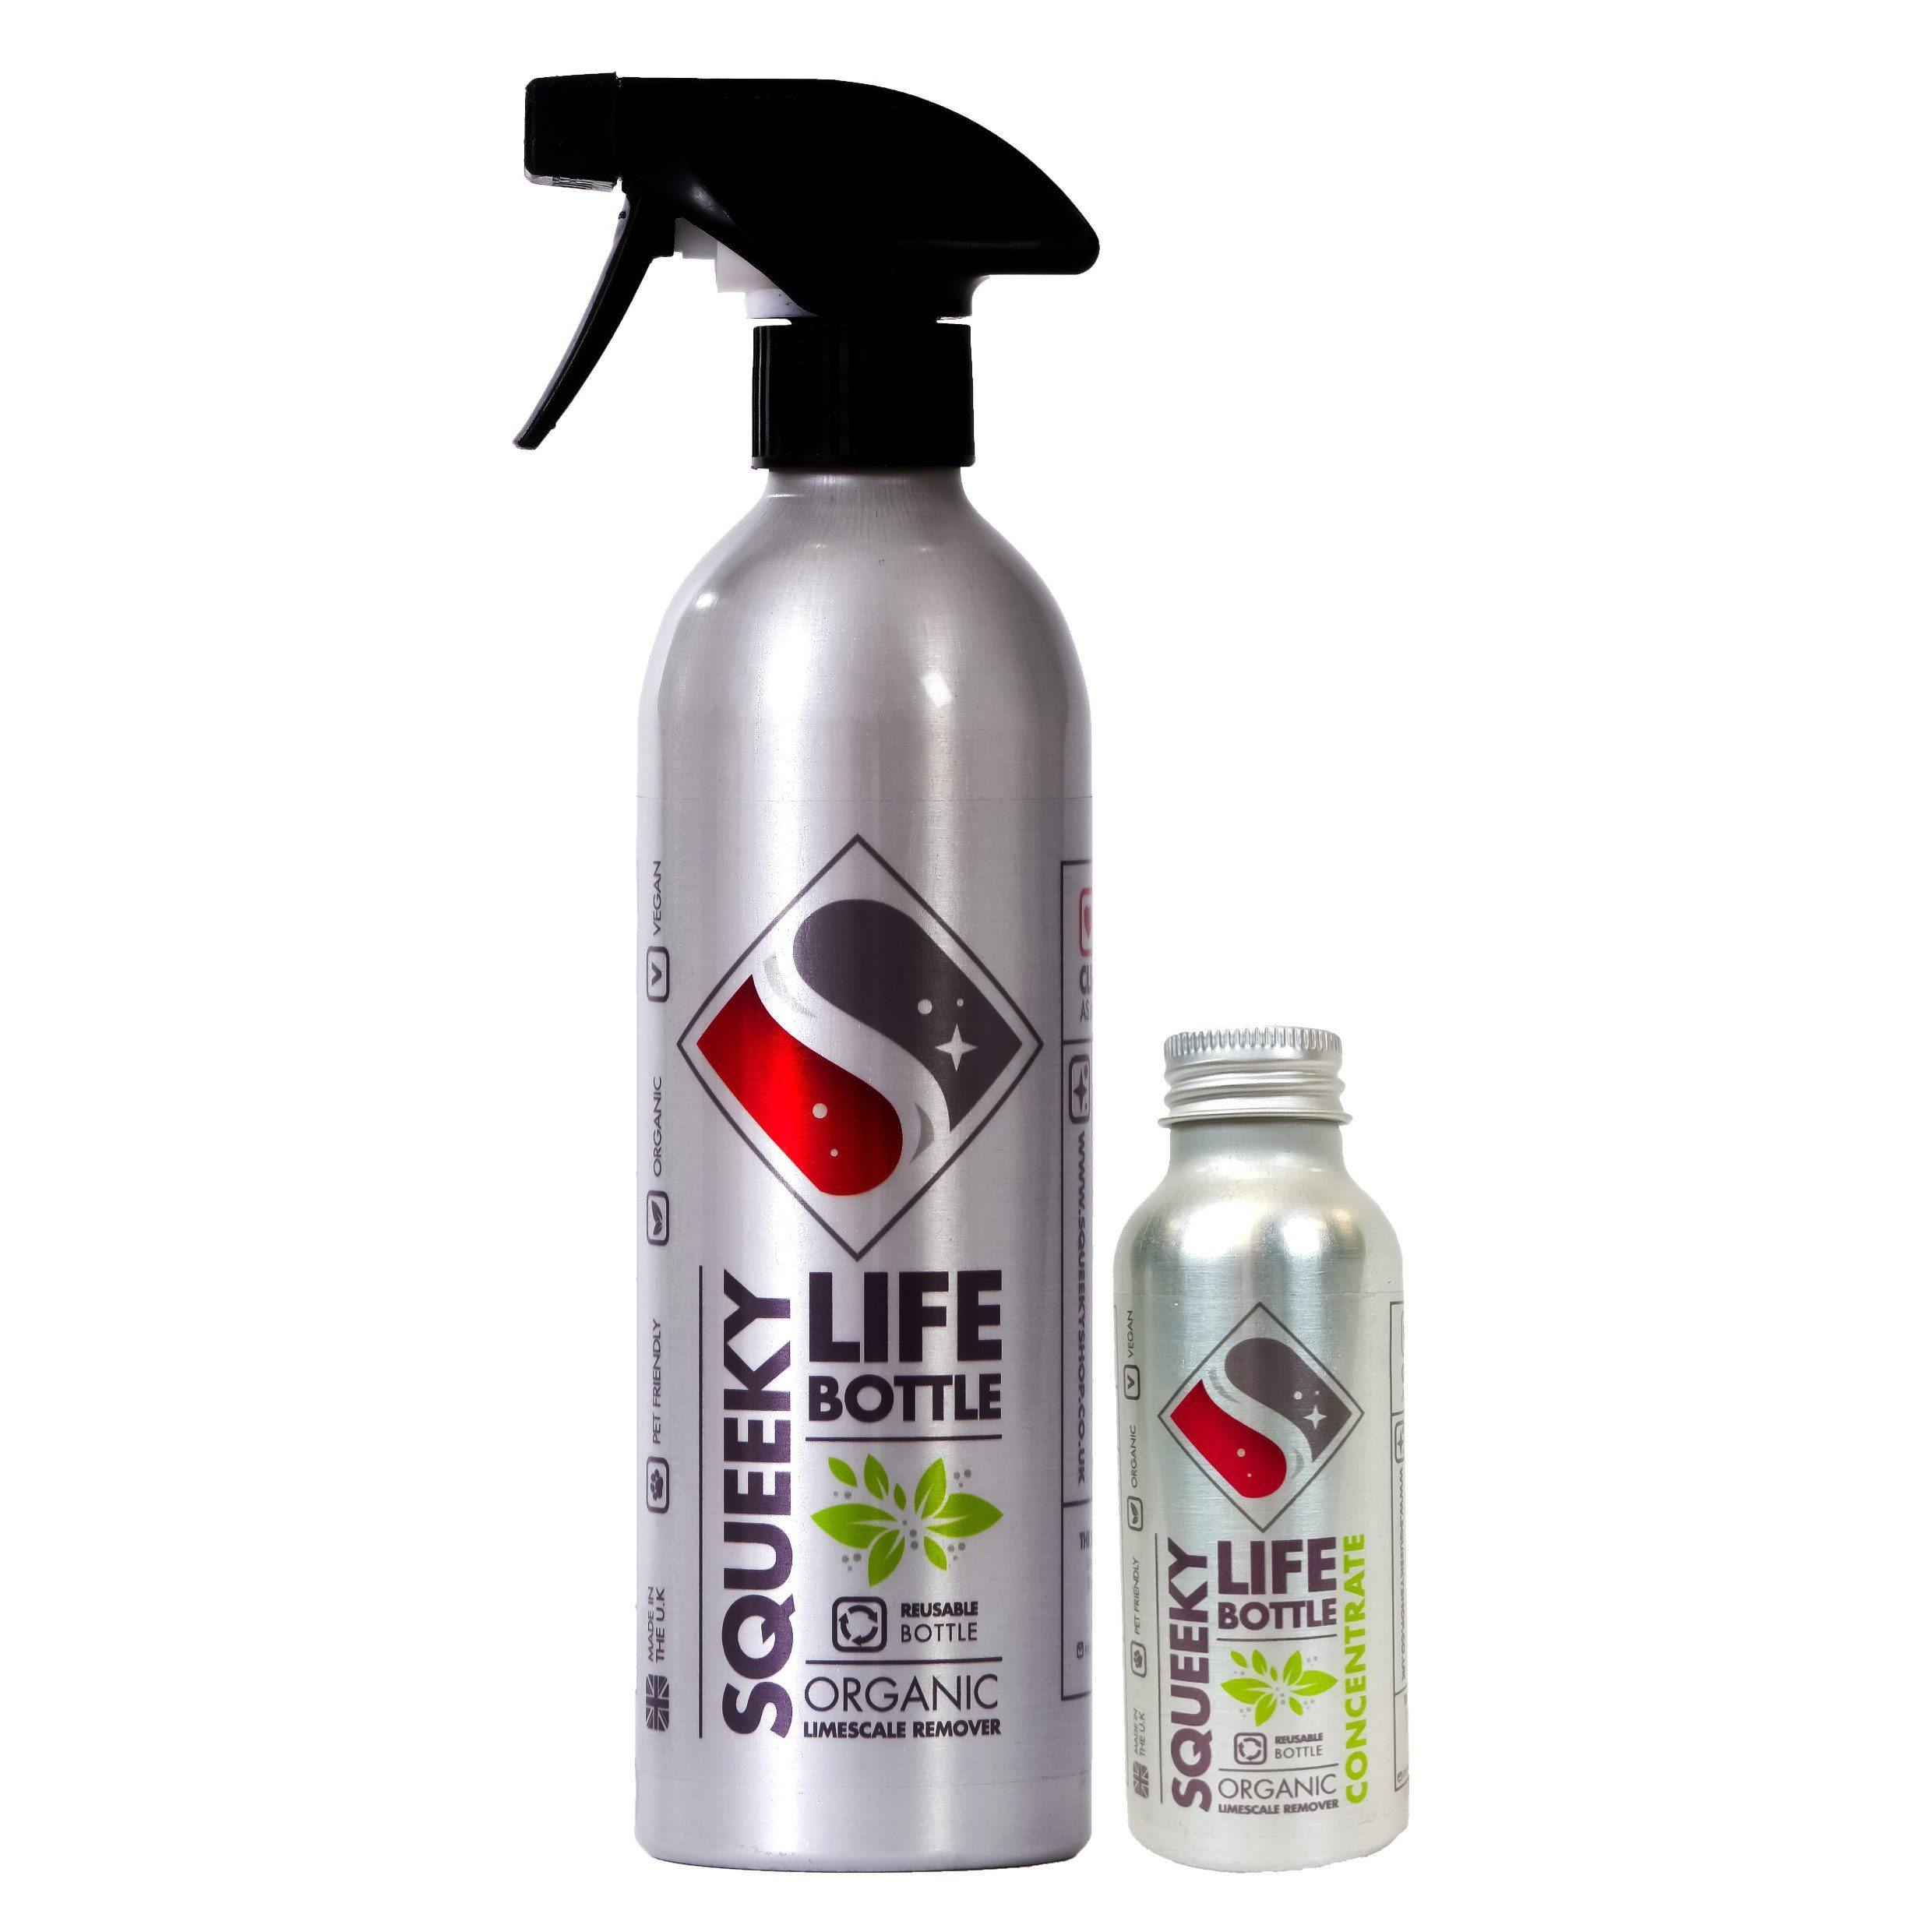 Organic - Limescale Remover Life Bottle Bundle Cleaning Products Foxyavenue UK